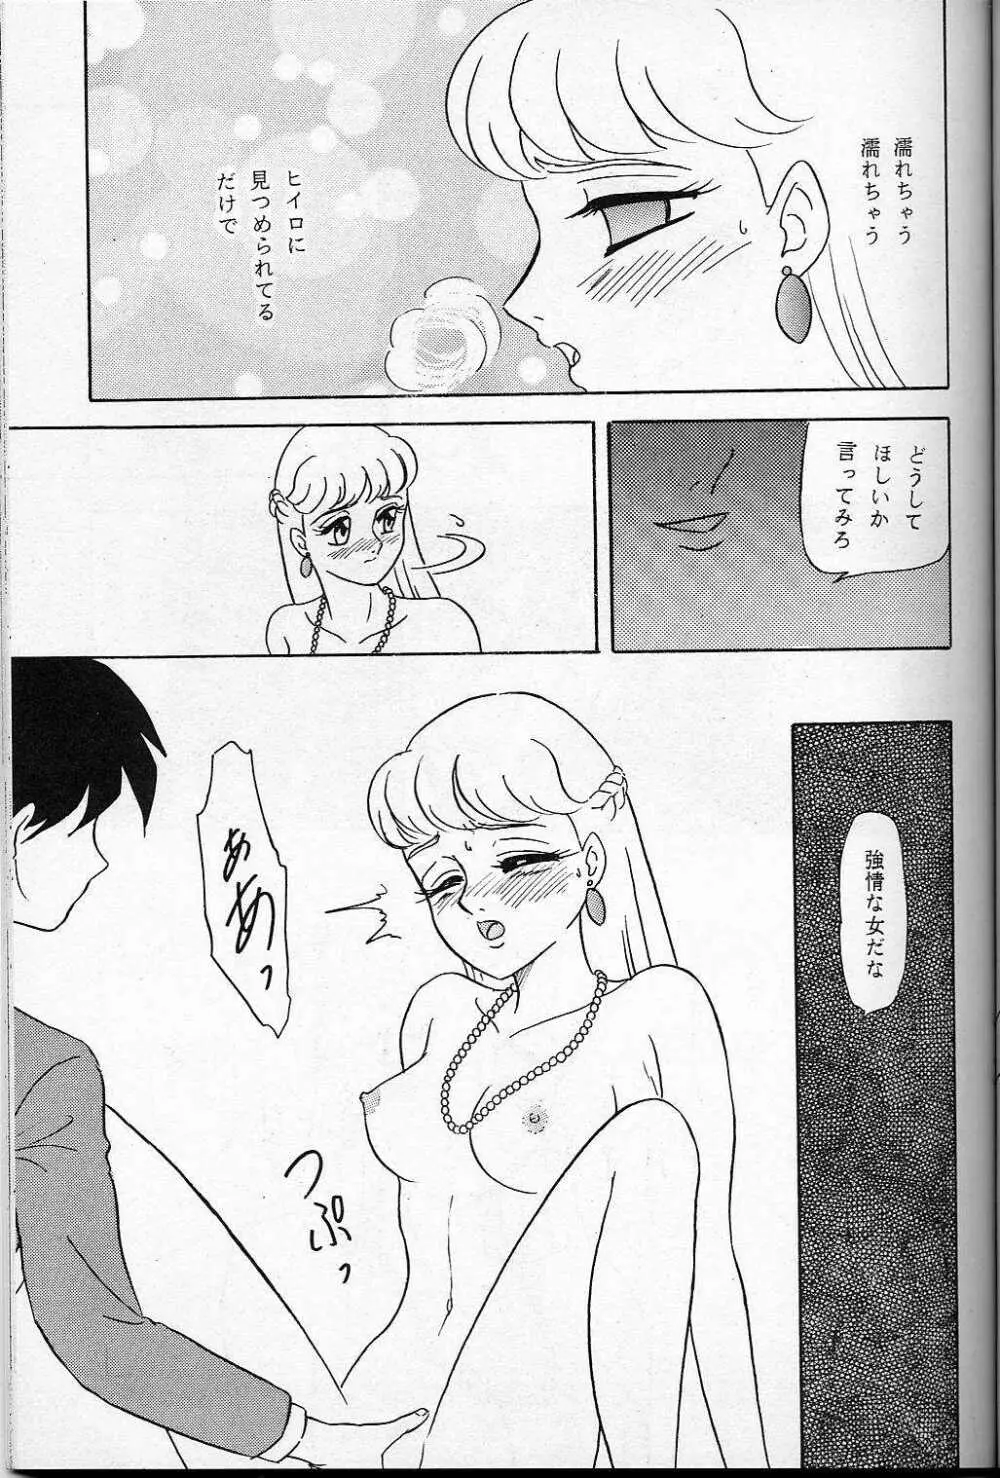 LUNCH BOX 14 - らんちたいむ3 - page21